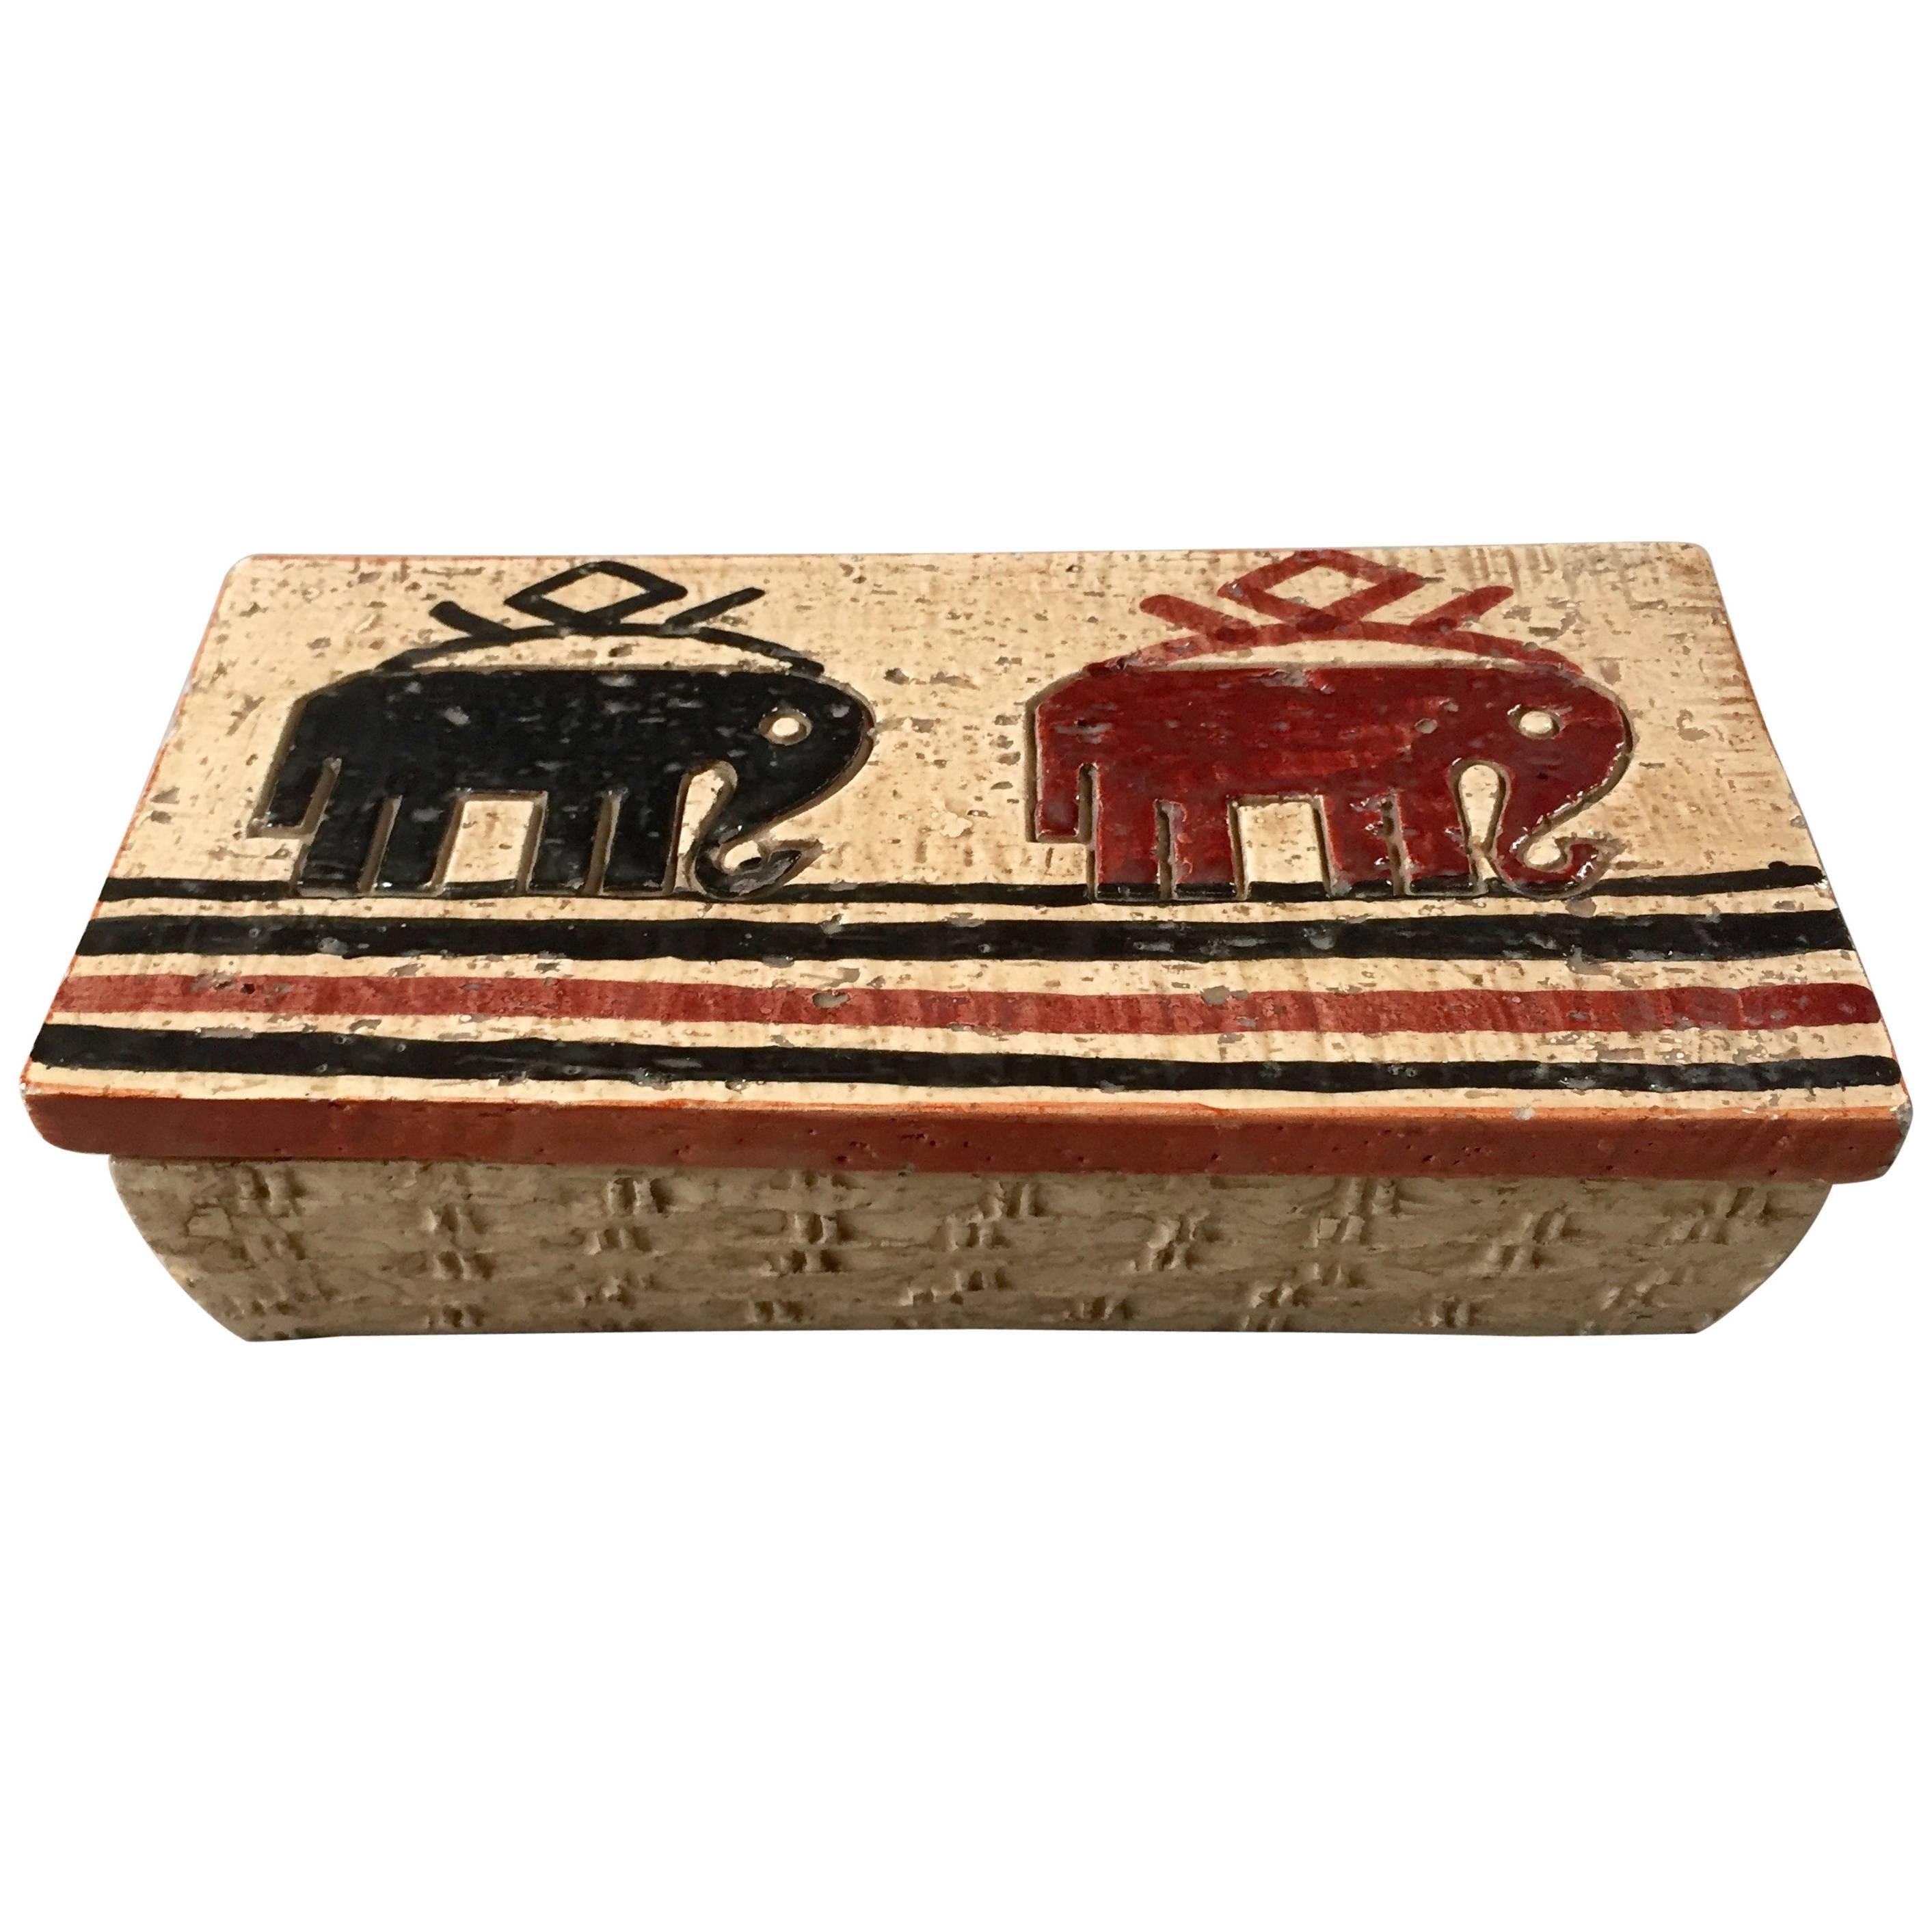 Rosenthal Netter Ceramic Box with Elephants